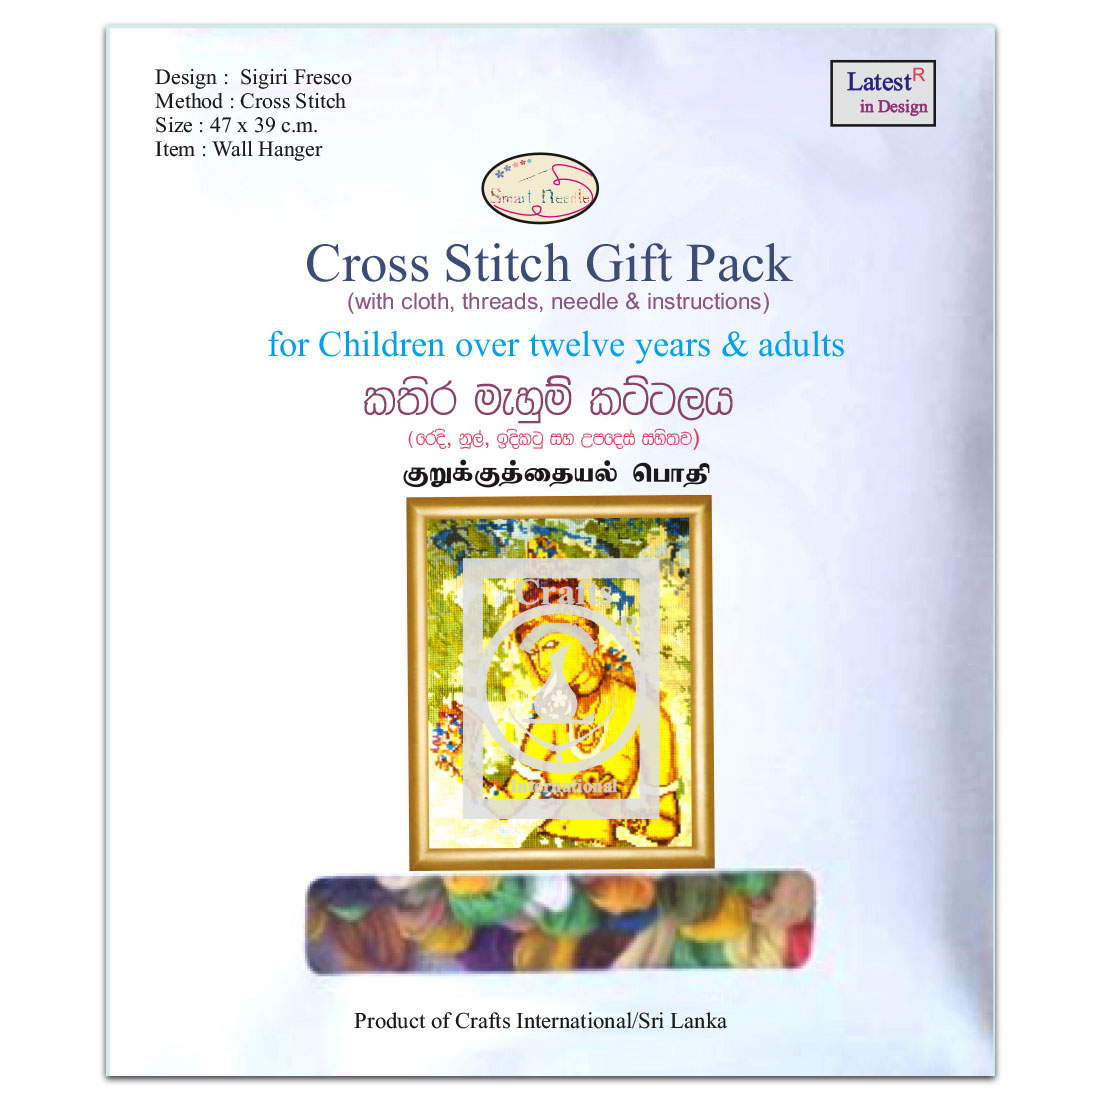 Cross Stitch Gift Pack - Sigiri Fresco